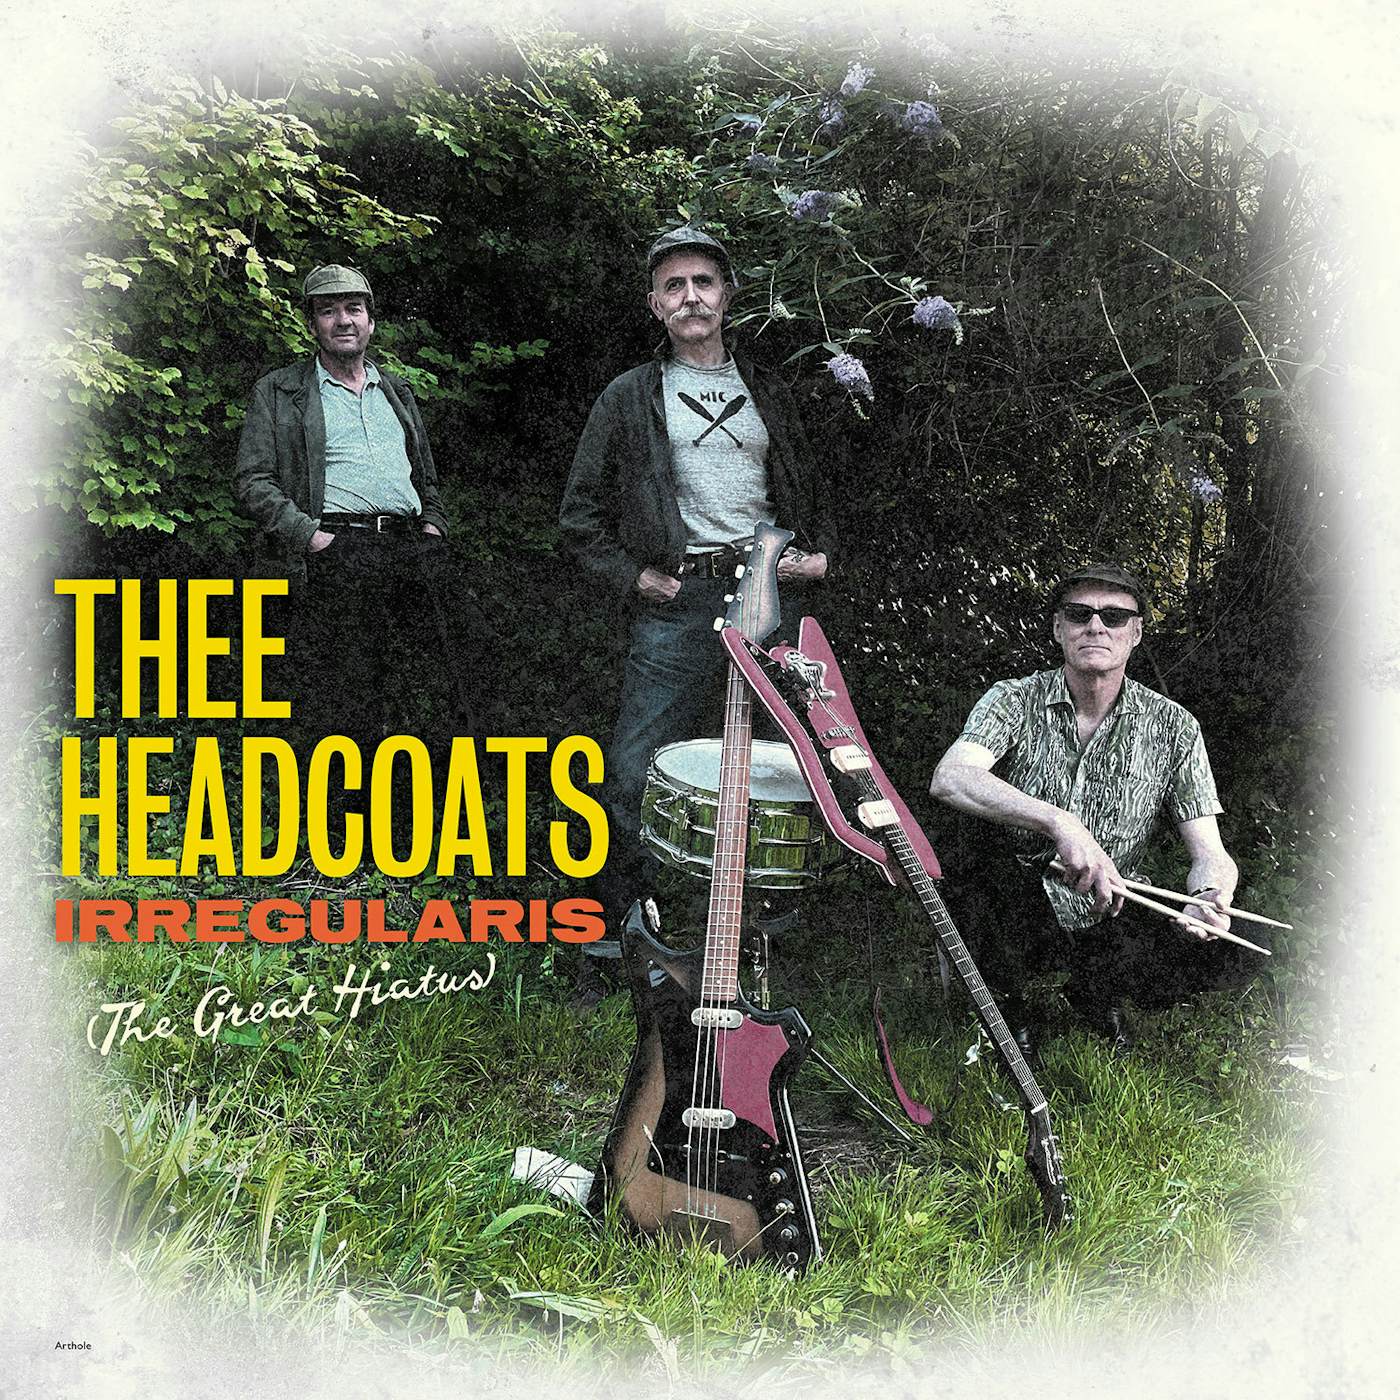 Thee Headcoats Irregularis  The Great Hiatus Vinyl Record